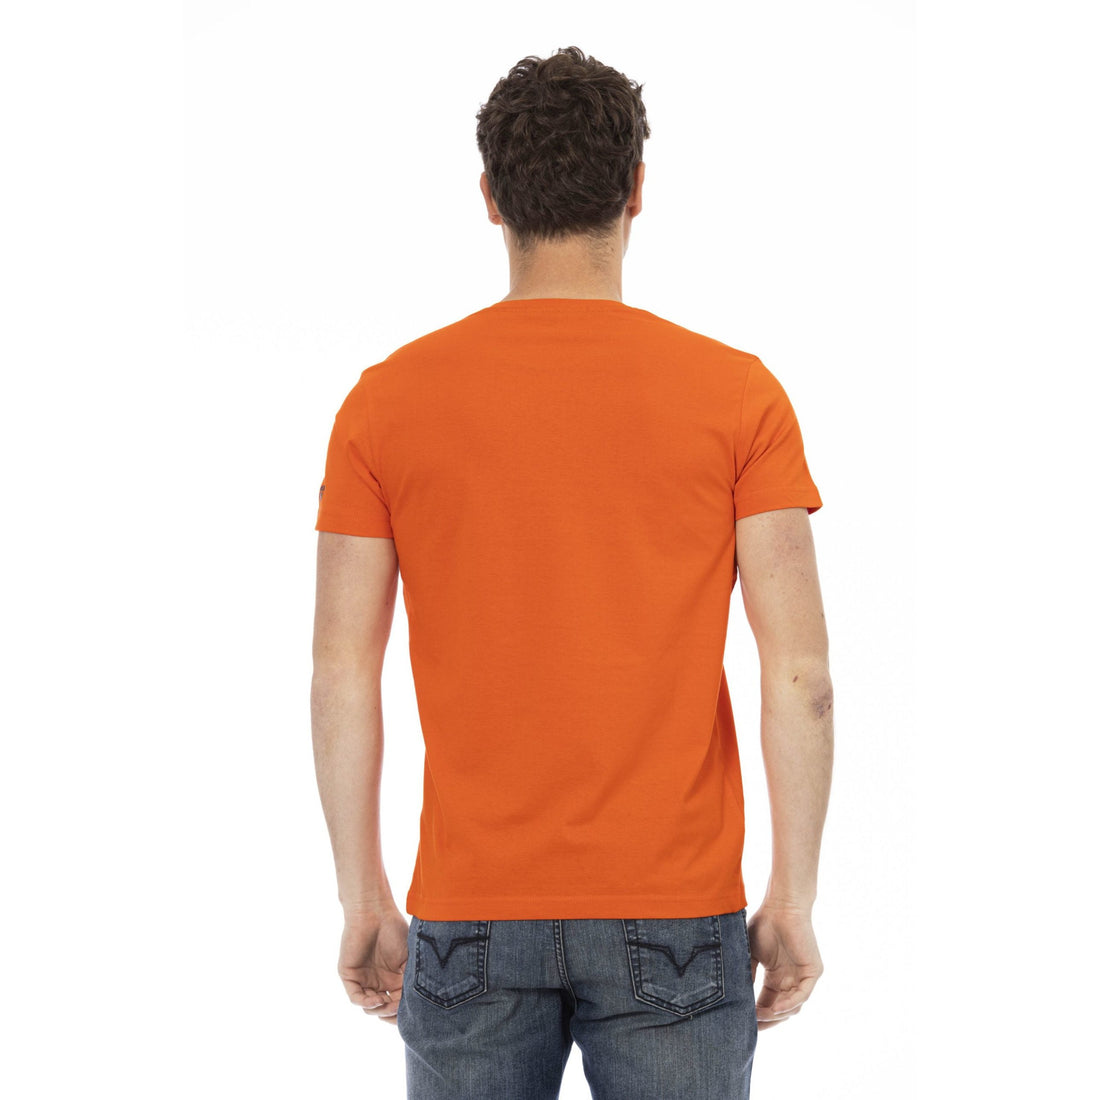 Trussardi Action Sleek Orange Short Sleeve Tee with Front Print